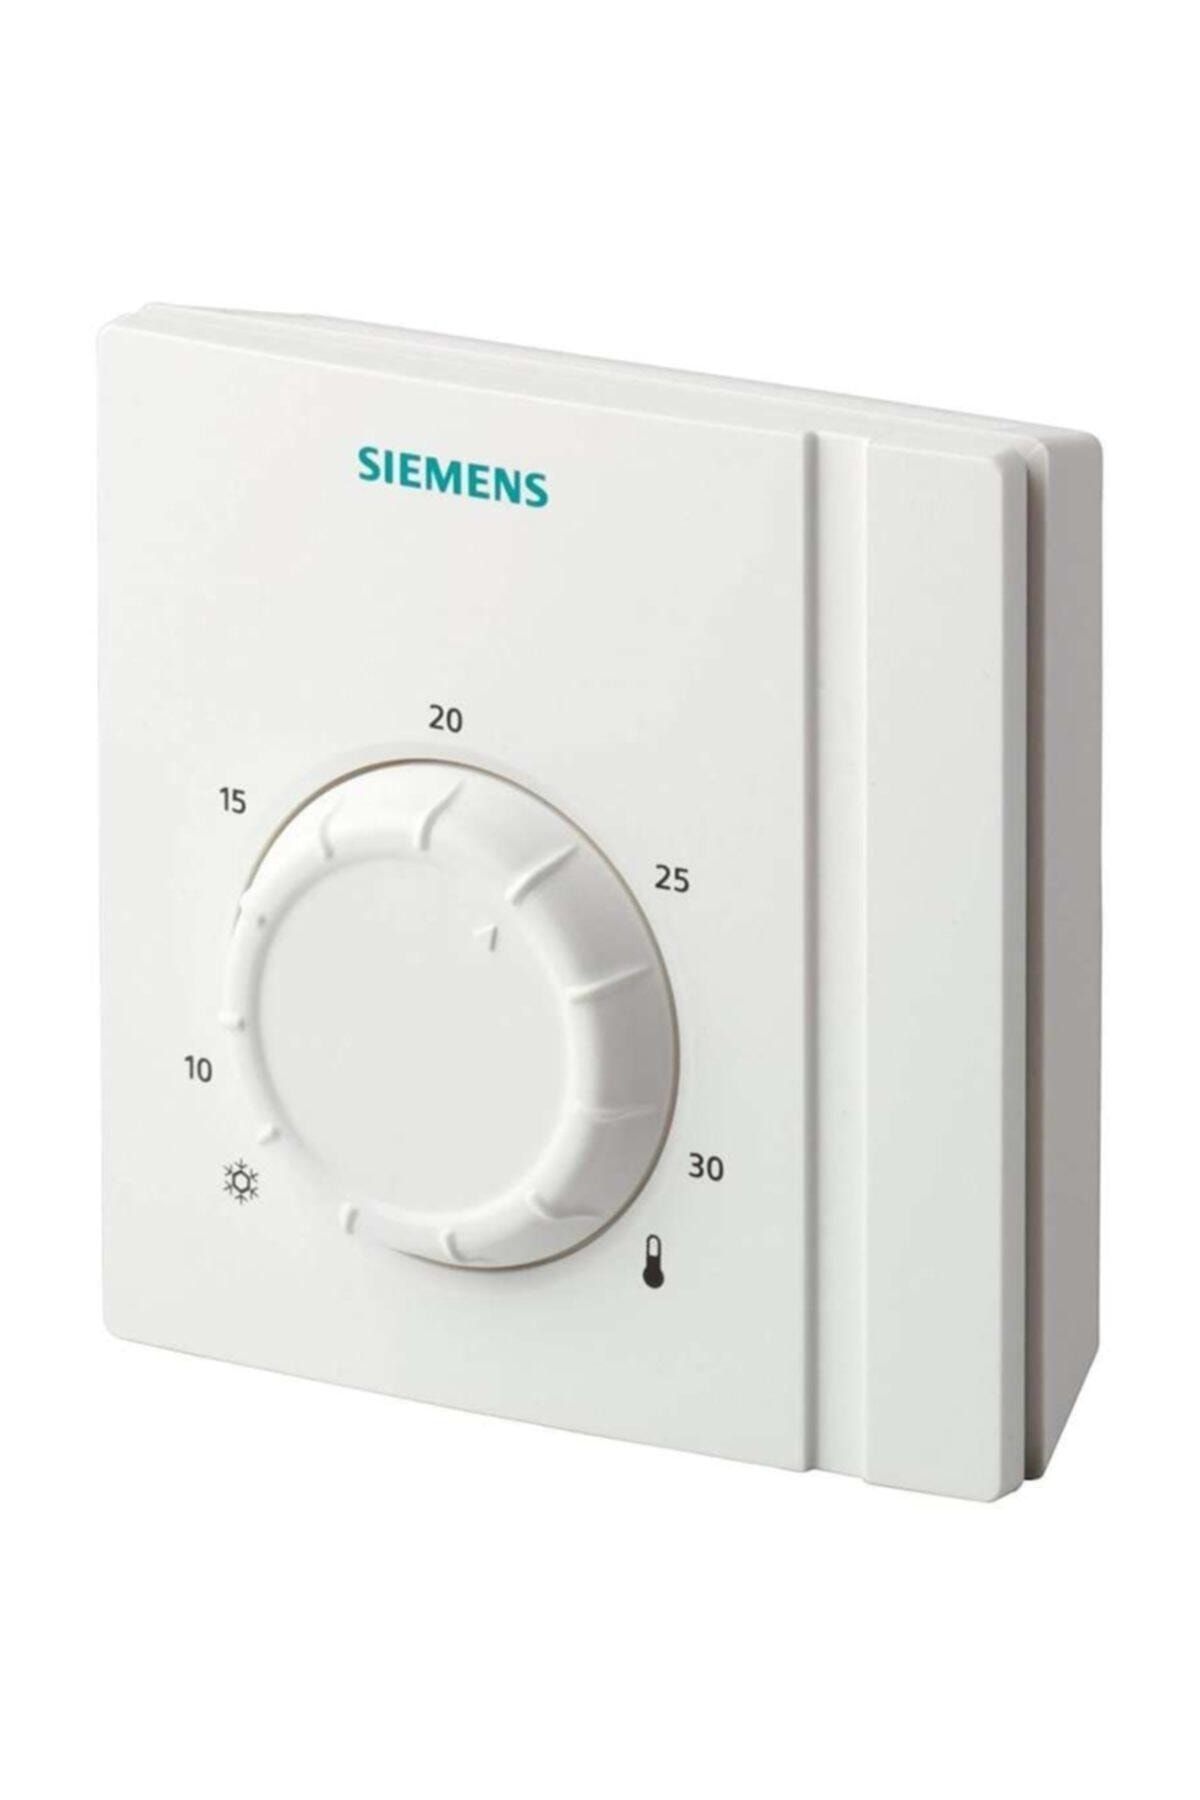 Siemens Raa-21 Elektromekanik Kablolu Oda Termostatı